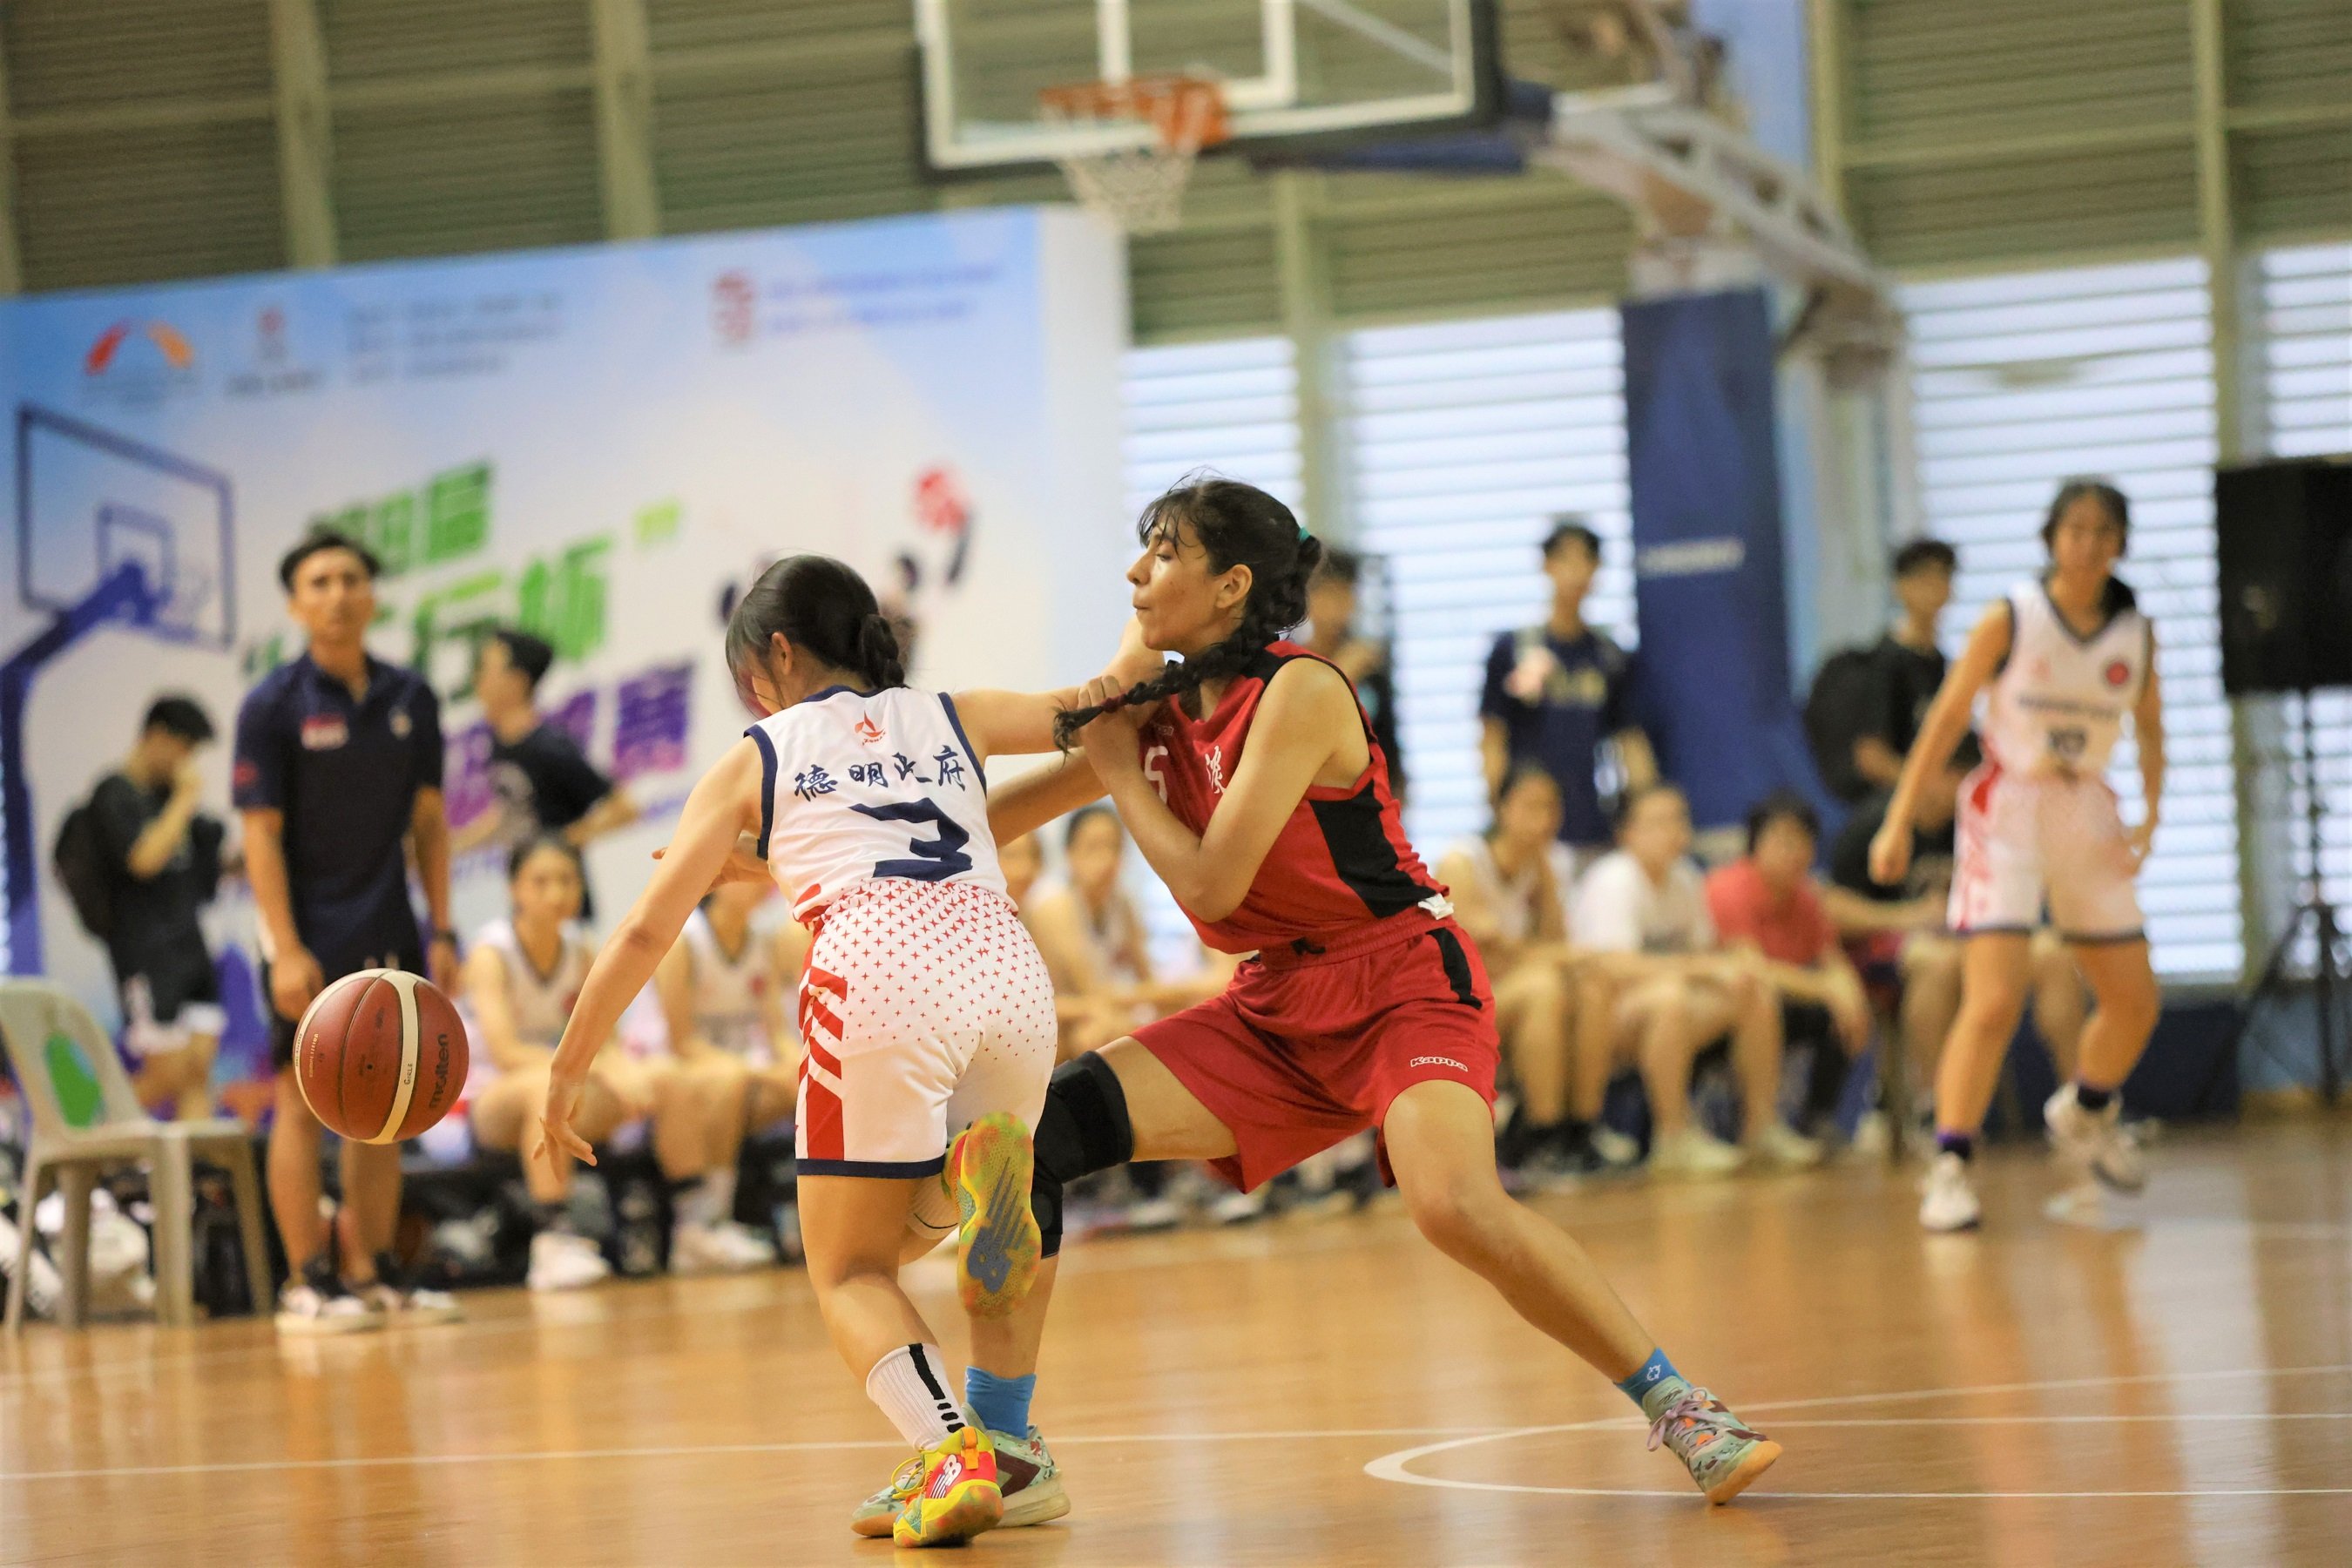 2023-04-28_NSG Basketball Div A Girls - DHS(White) vs TJC(Red)_Photo by Anbumani (3)